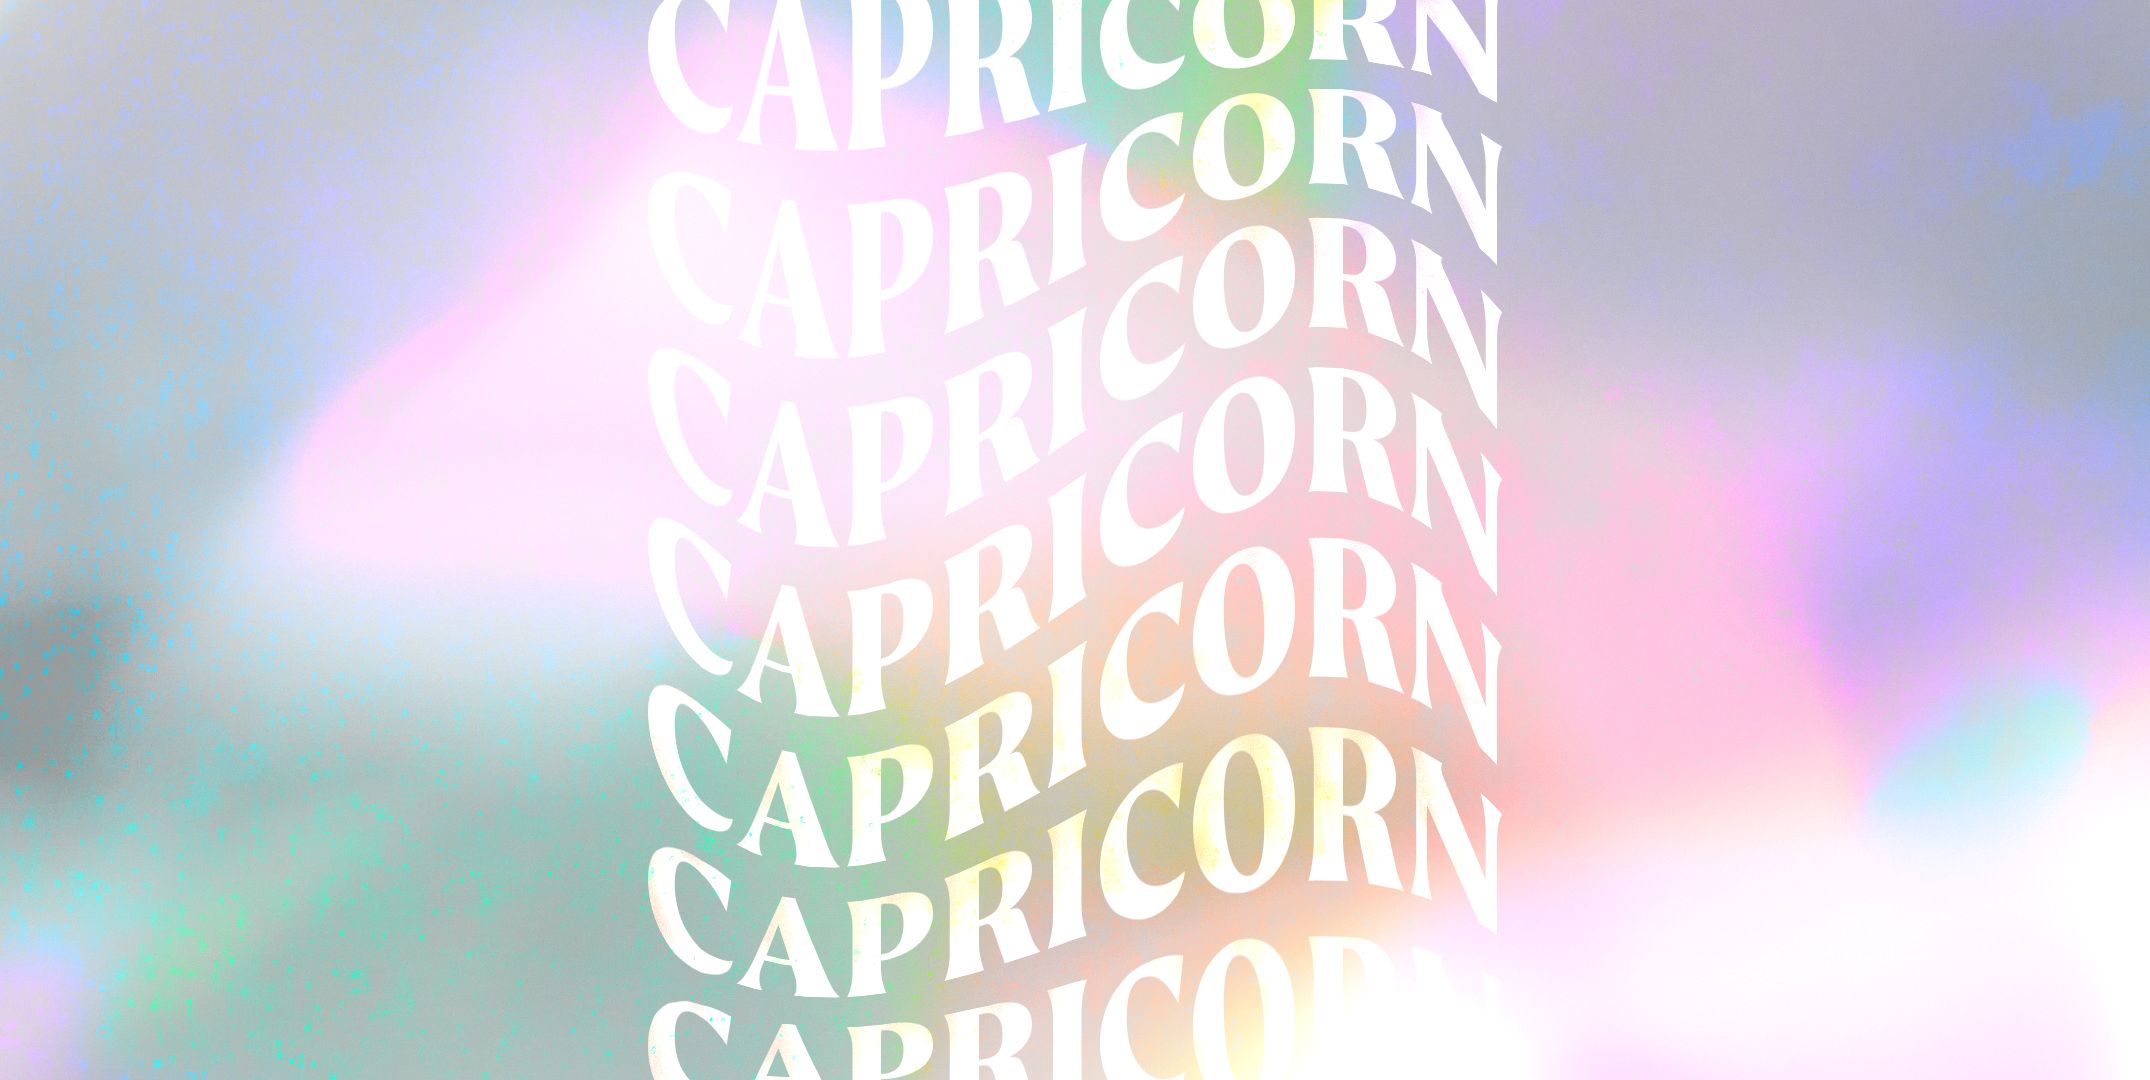 Horoscope Signs Capricorn